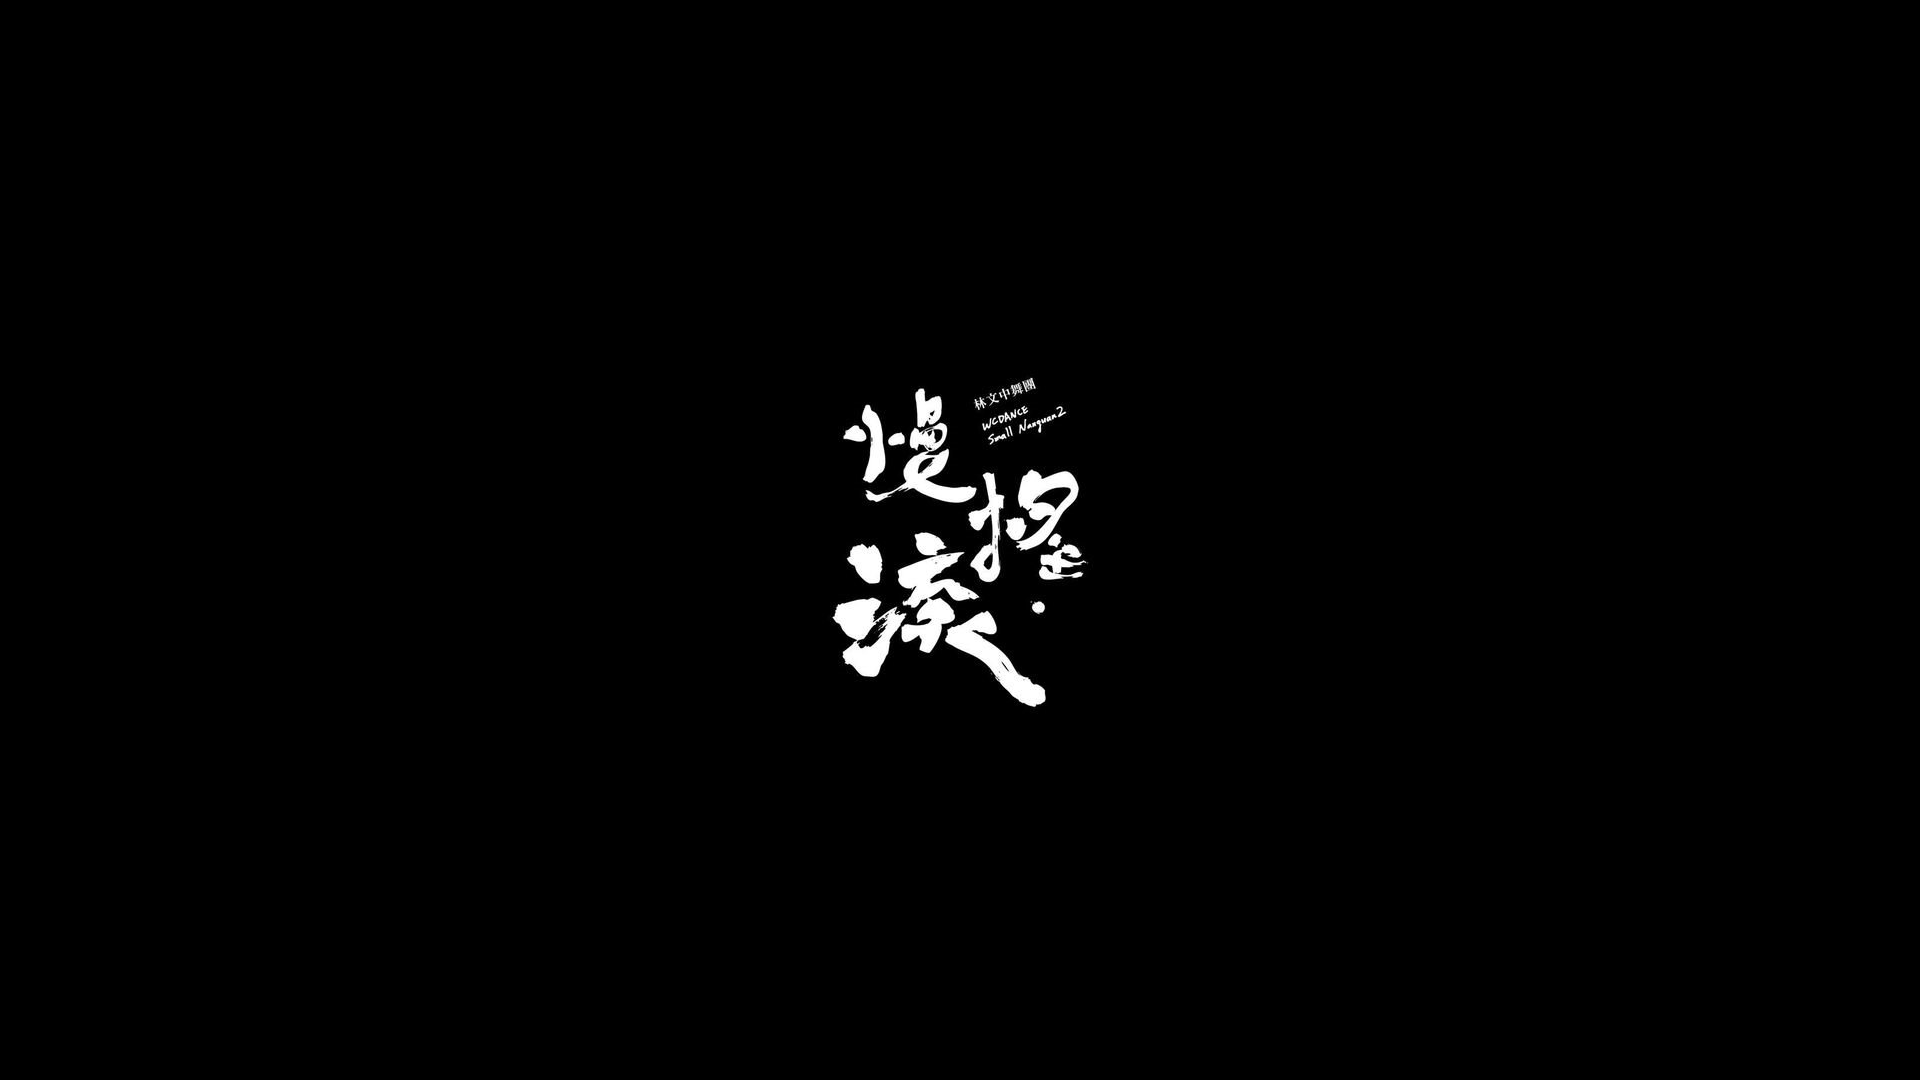 Japan Minimalism Black Japanese Characters Kanji White Wallpaper:1920x1080